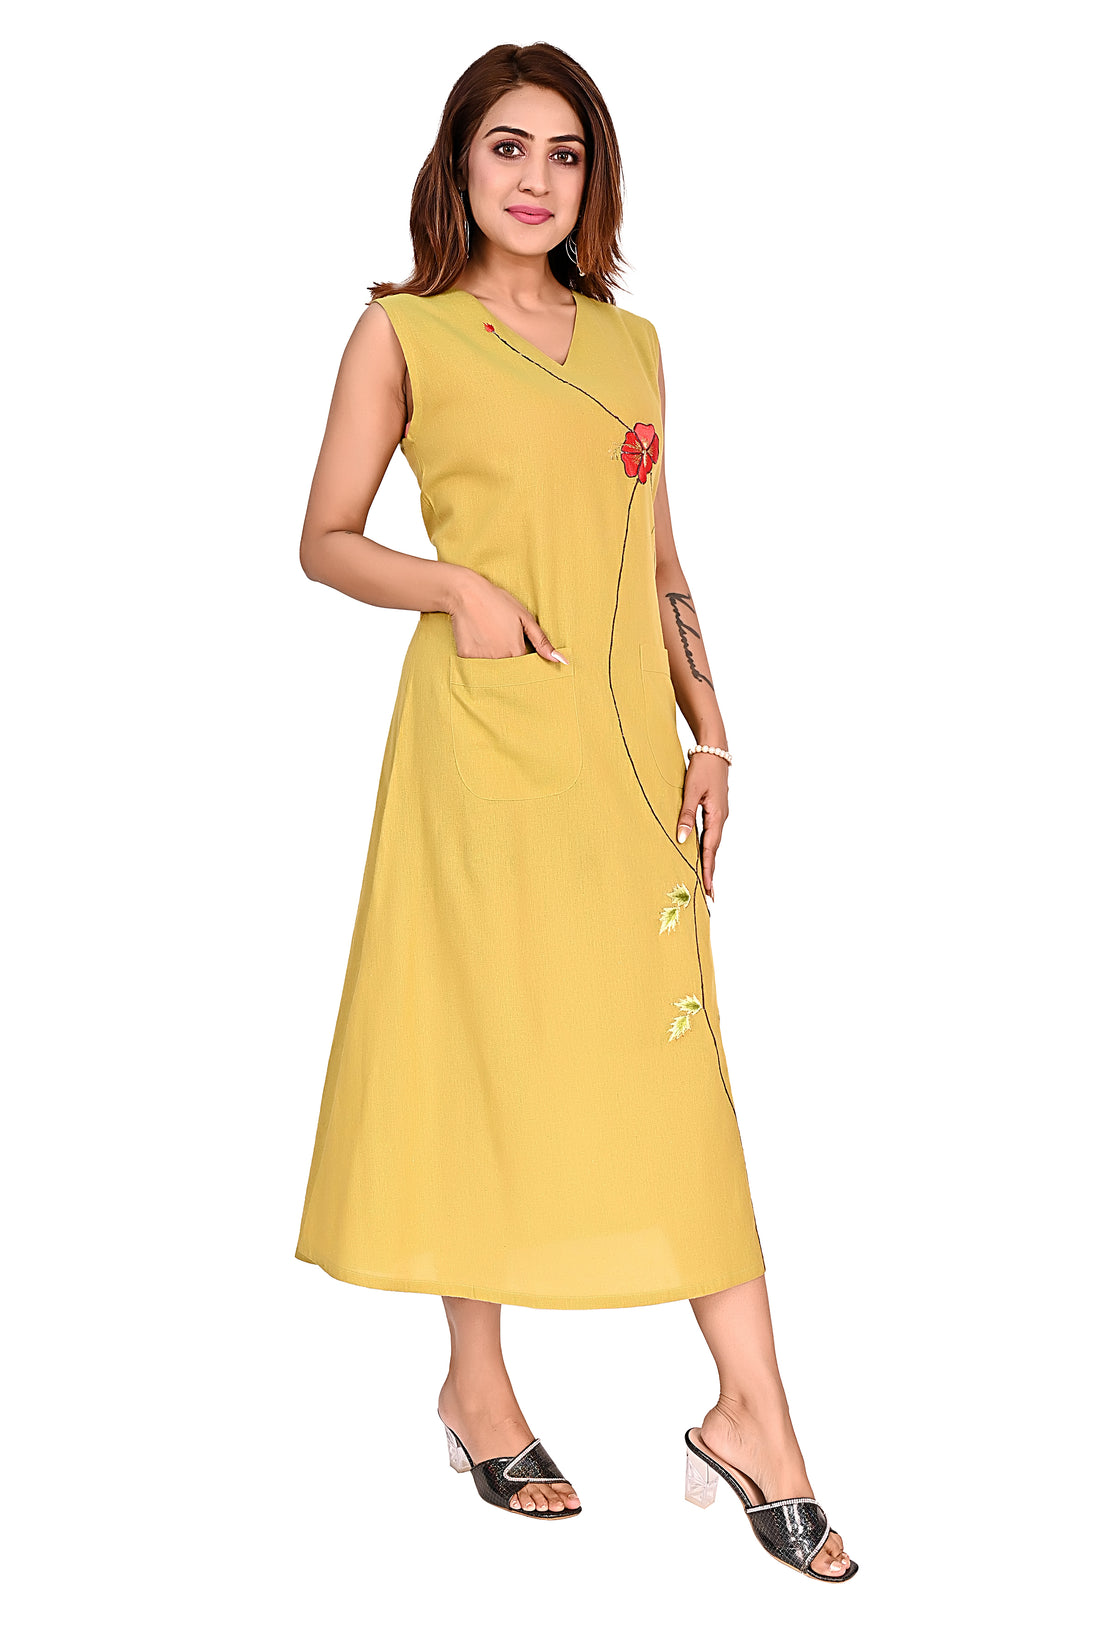 Nirmal online Premium cotton tunic Dress for Women in  Lemon green colour